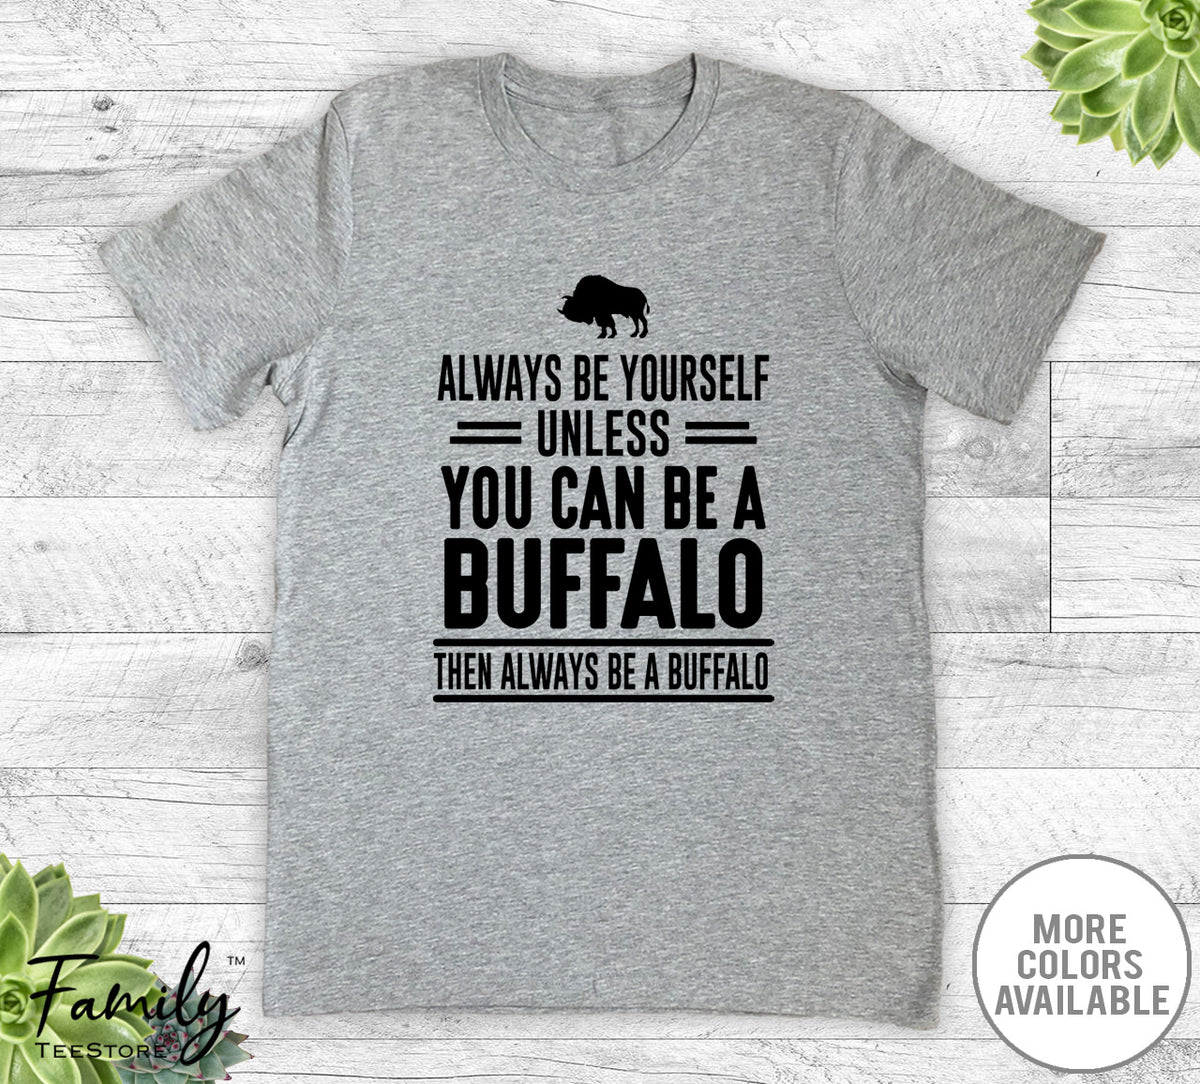 Always Be Yourself Unless You Can Be A Buffalo - Unisex T-shirt - Buffalo Shirt - Buffalo Gift - familyteeprints